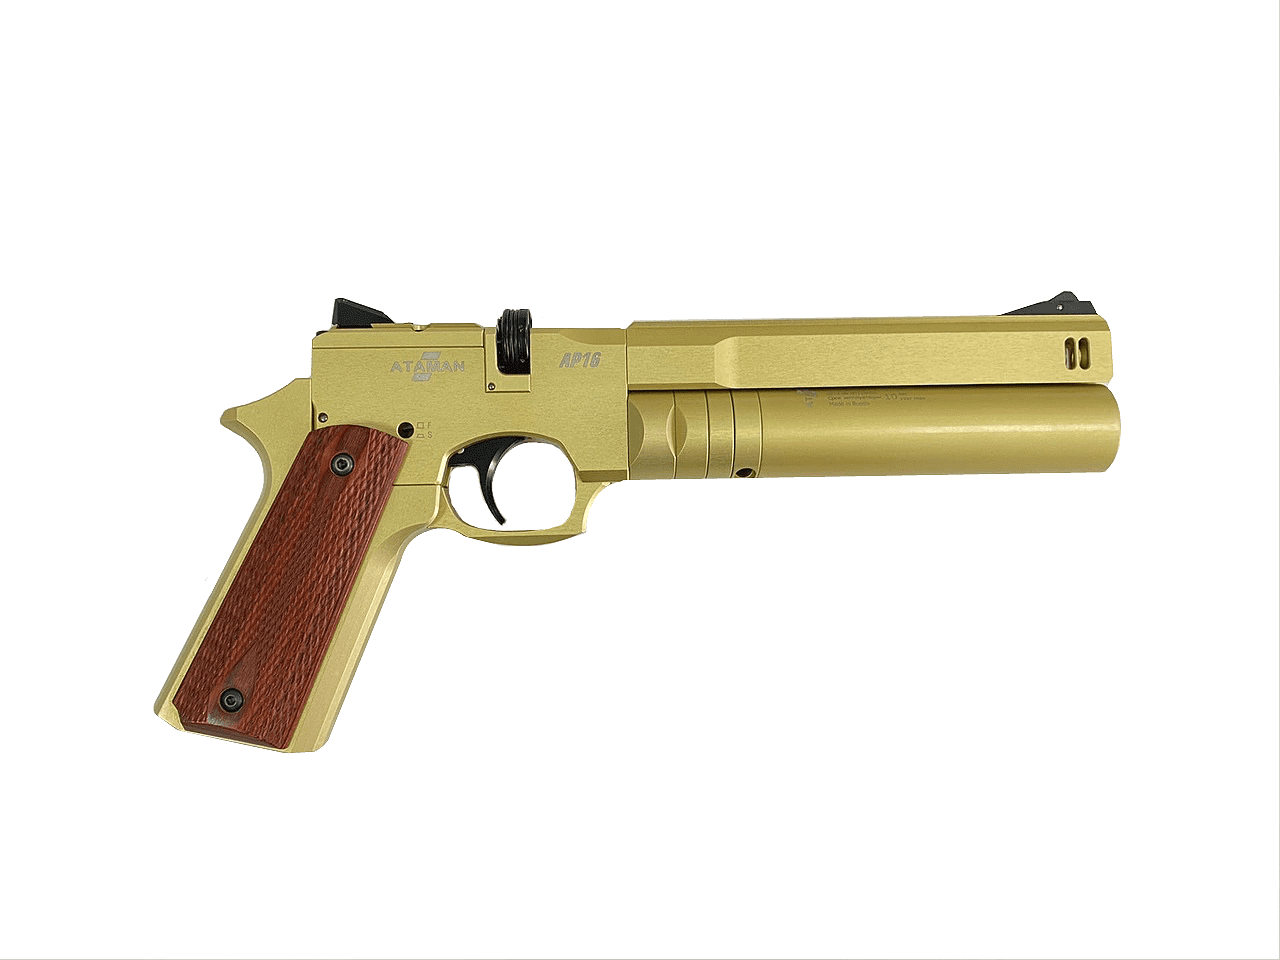 Пневматический PCP пистолет ATAMAN AP16 Desert Compact (рукоятка Metal), кал. 5.5мм